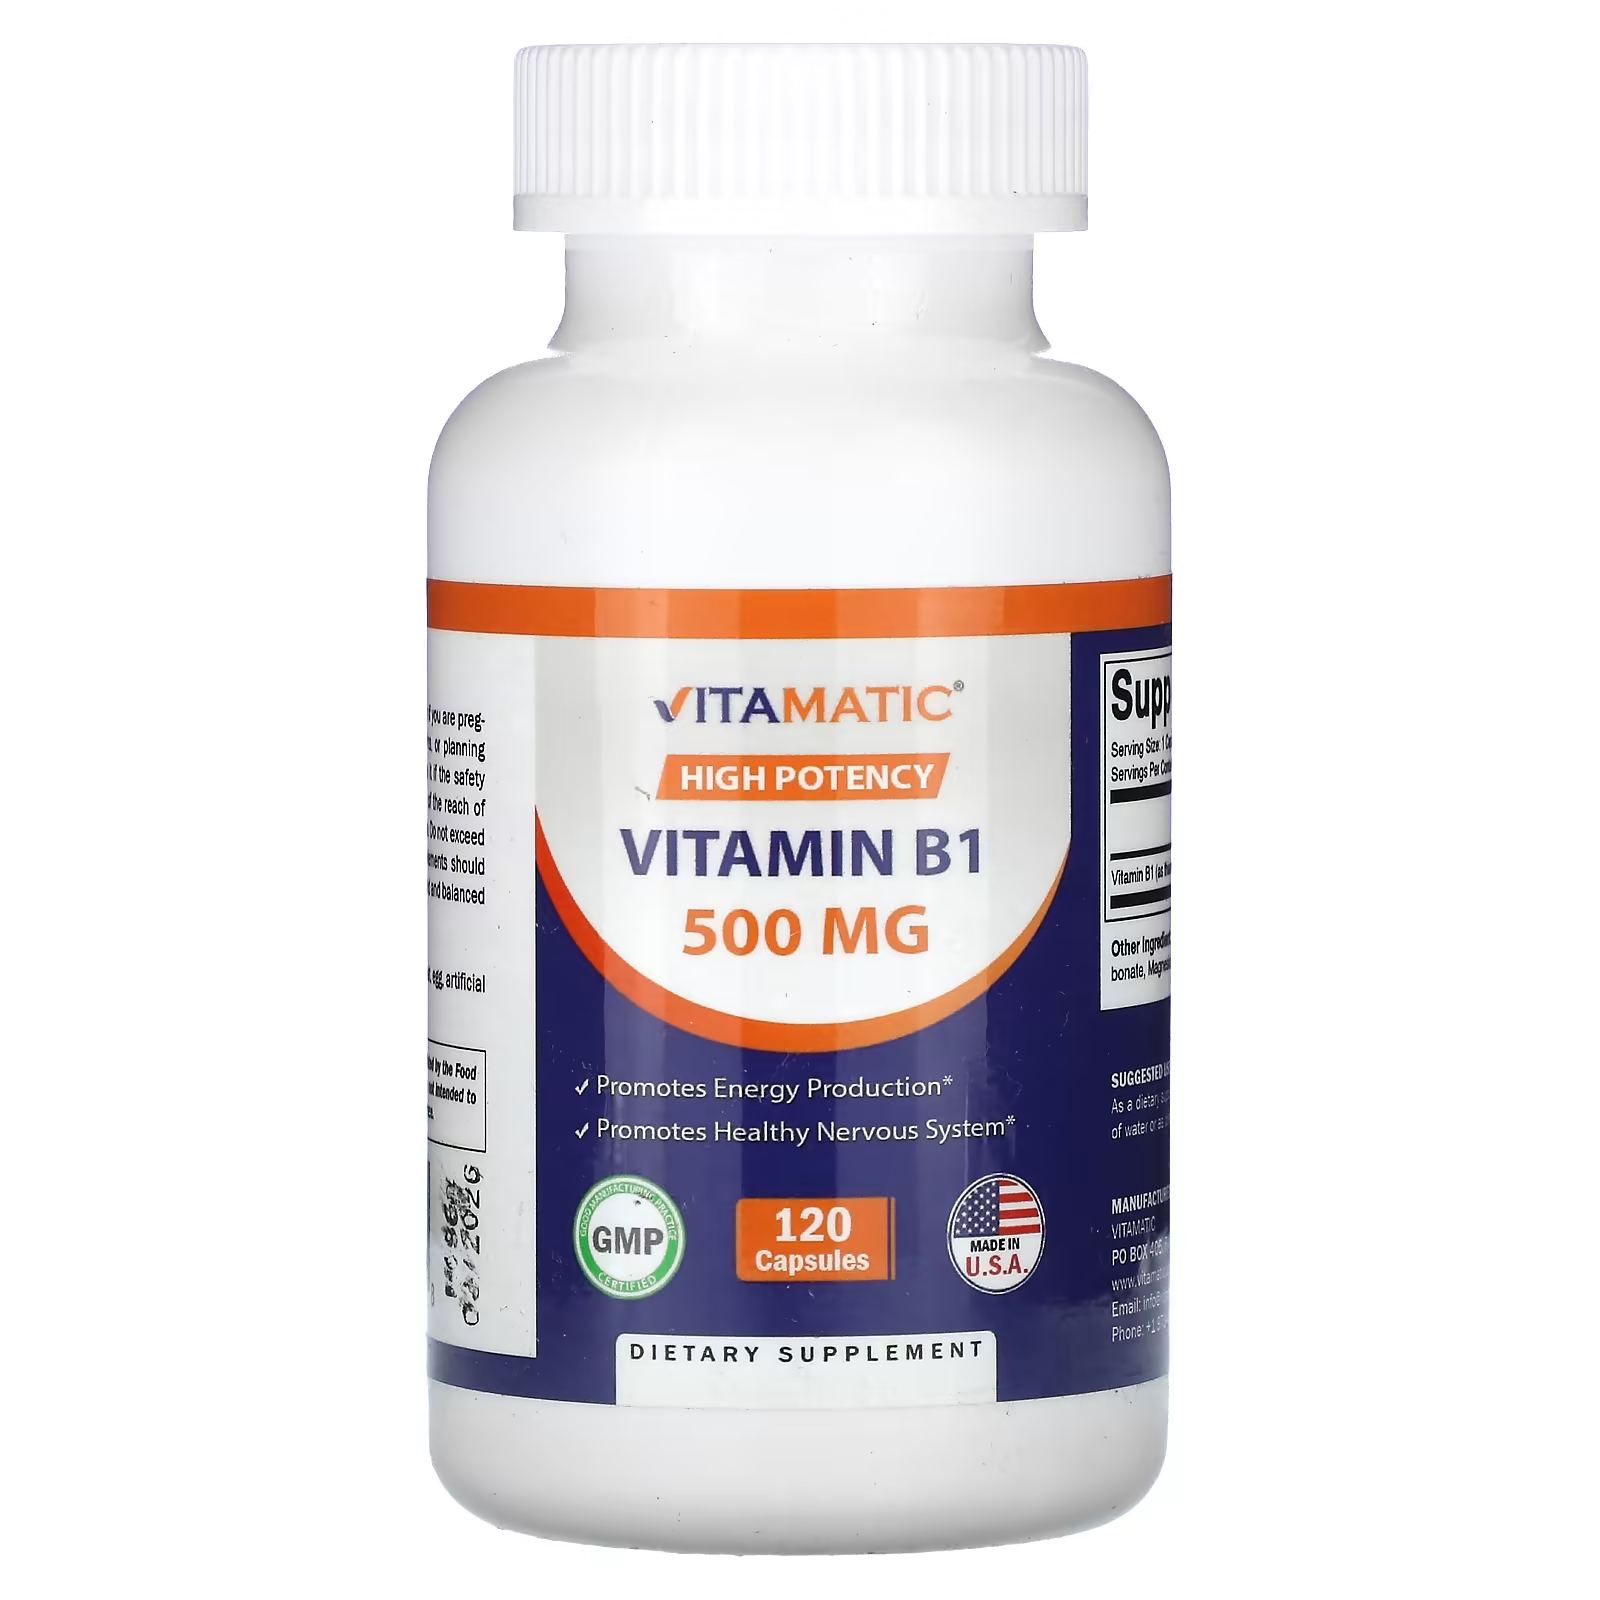 Vitamatic Высокоэффективный витамин B1 500 мг 120 капсул vitamatic витамин b6 500 мг 120 таблеток